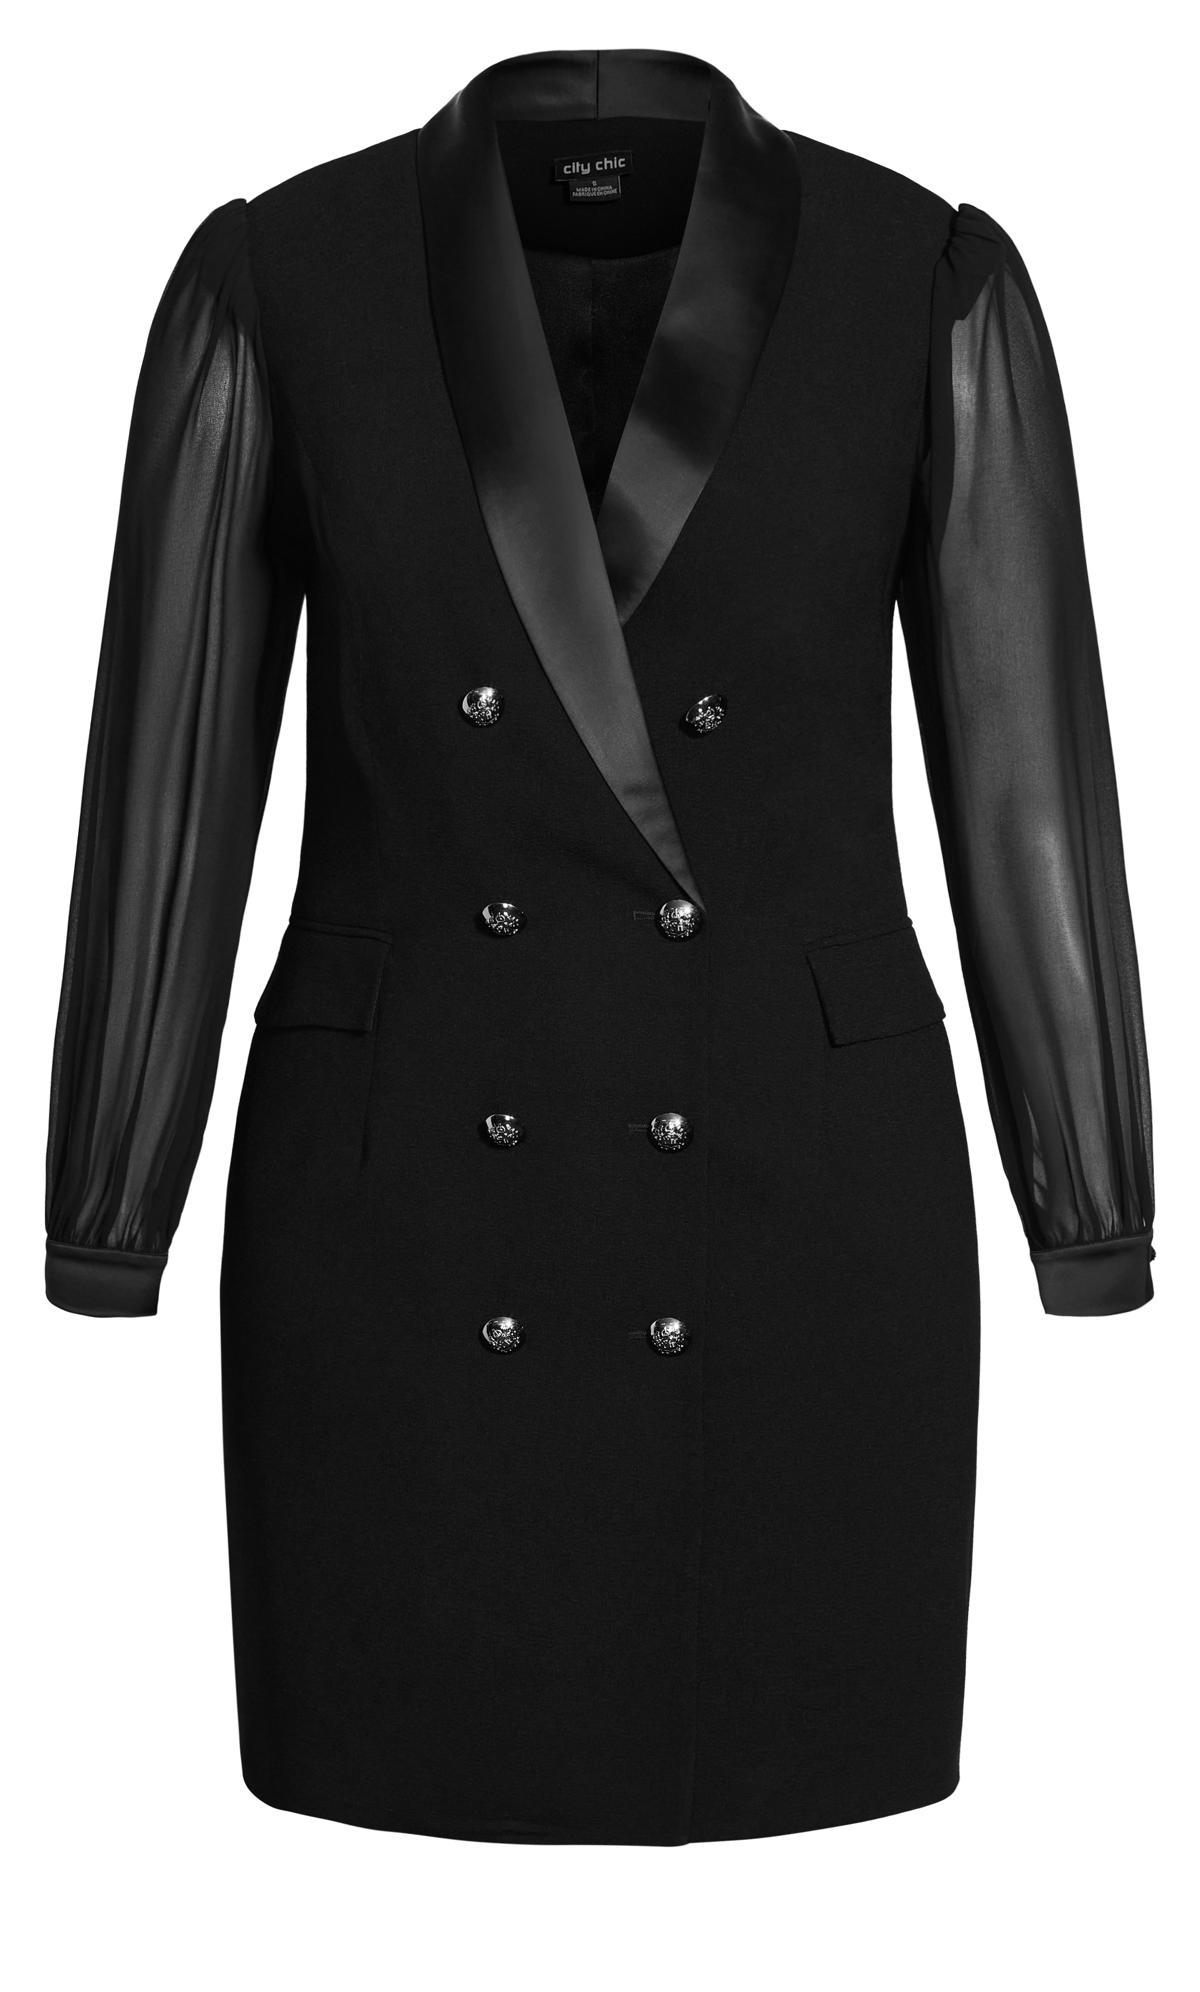 Evans Black Sheer Sleeve Blazer Dress 3